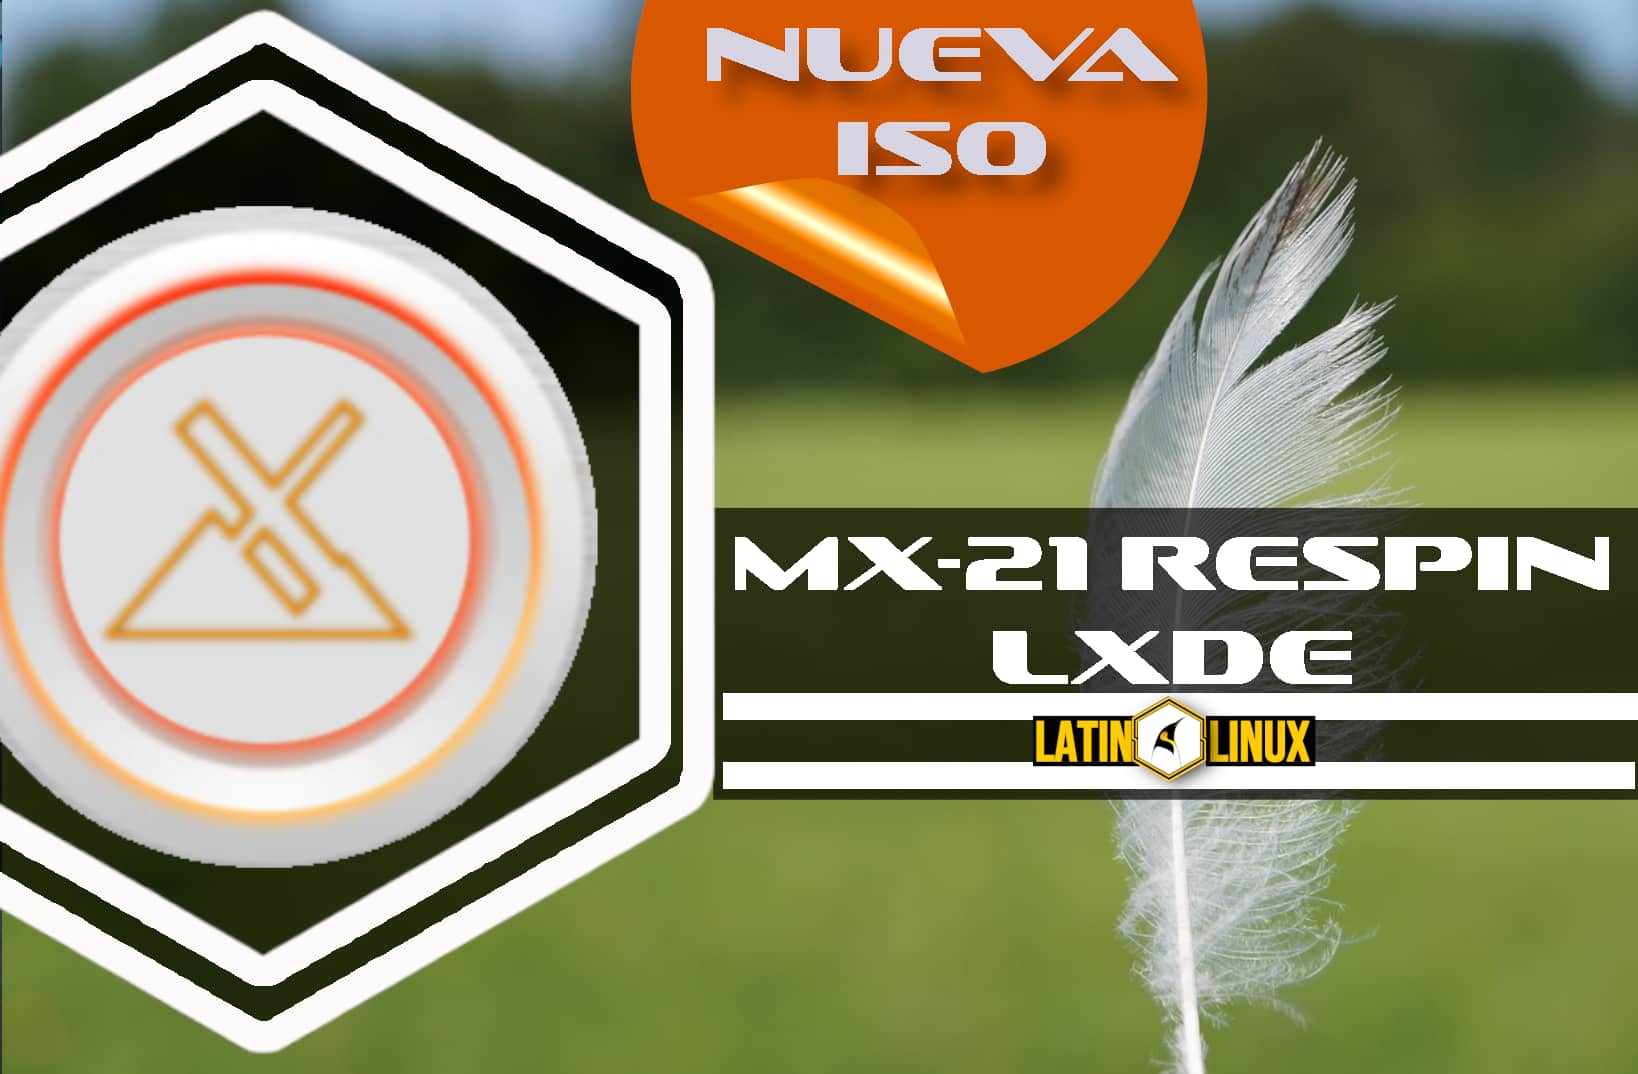 Nueva imagen ISO de MX-21.03 LXDE. - Latin Linux